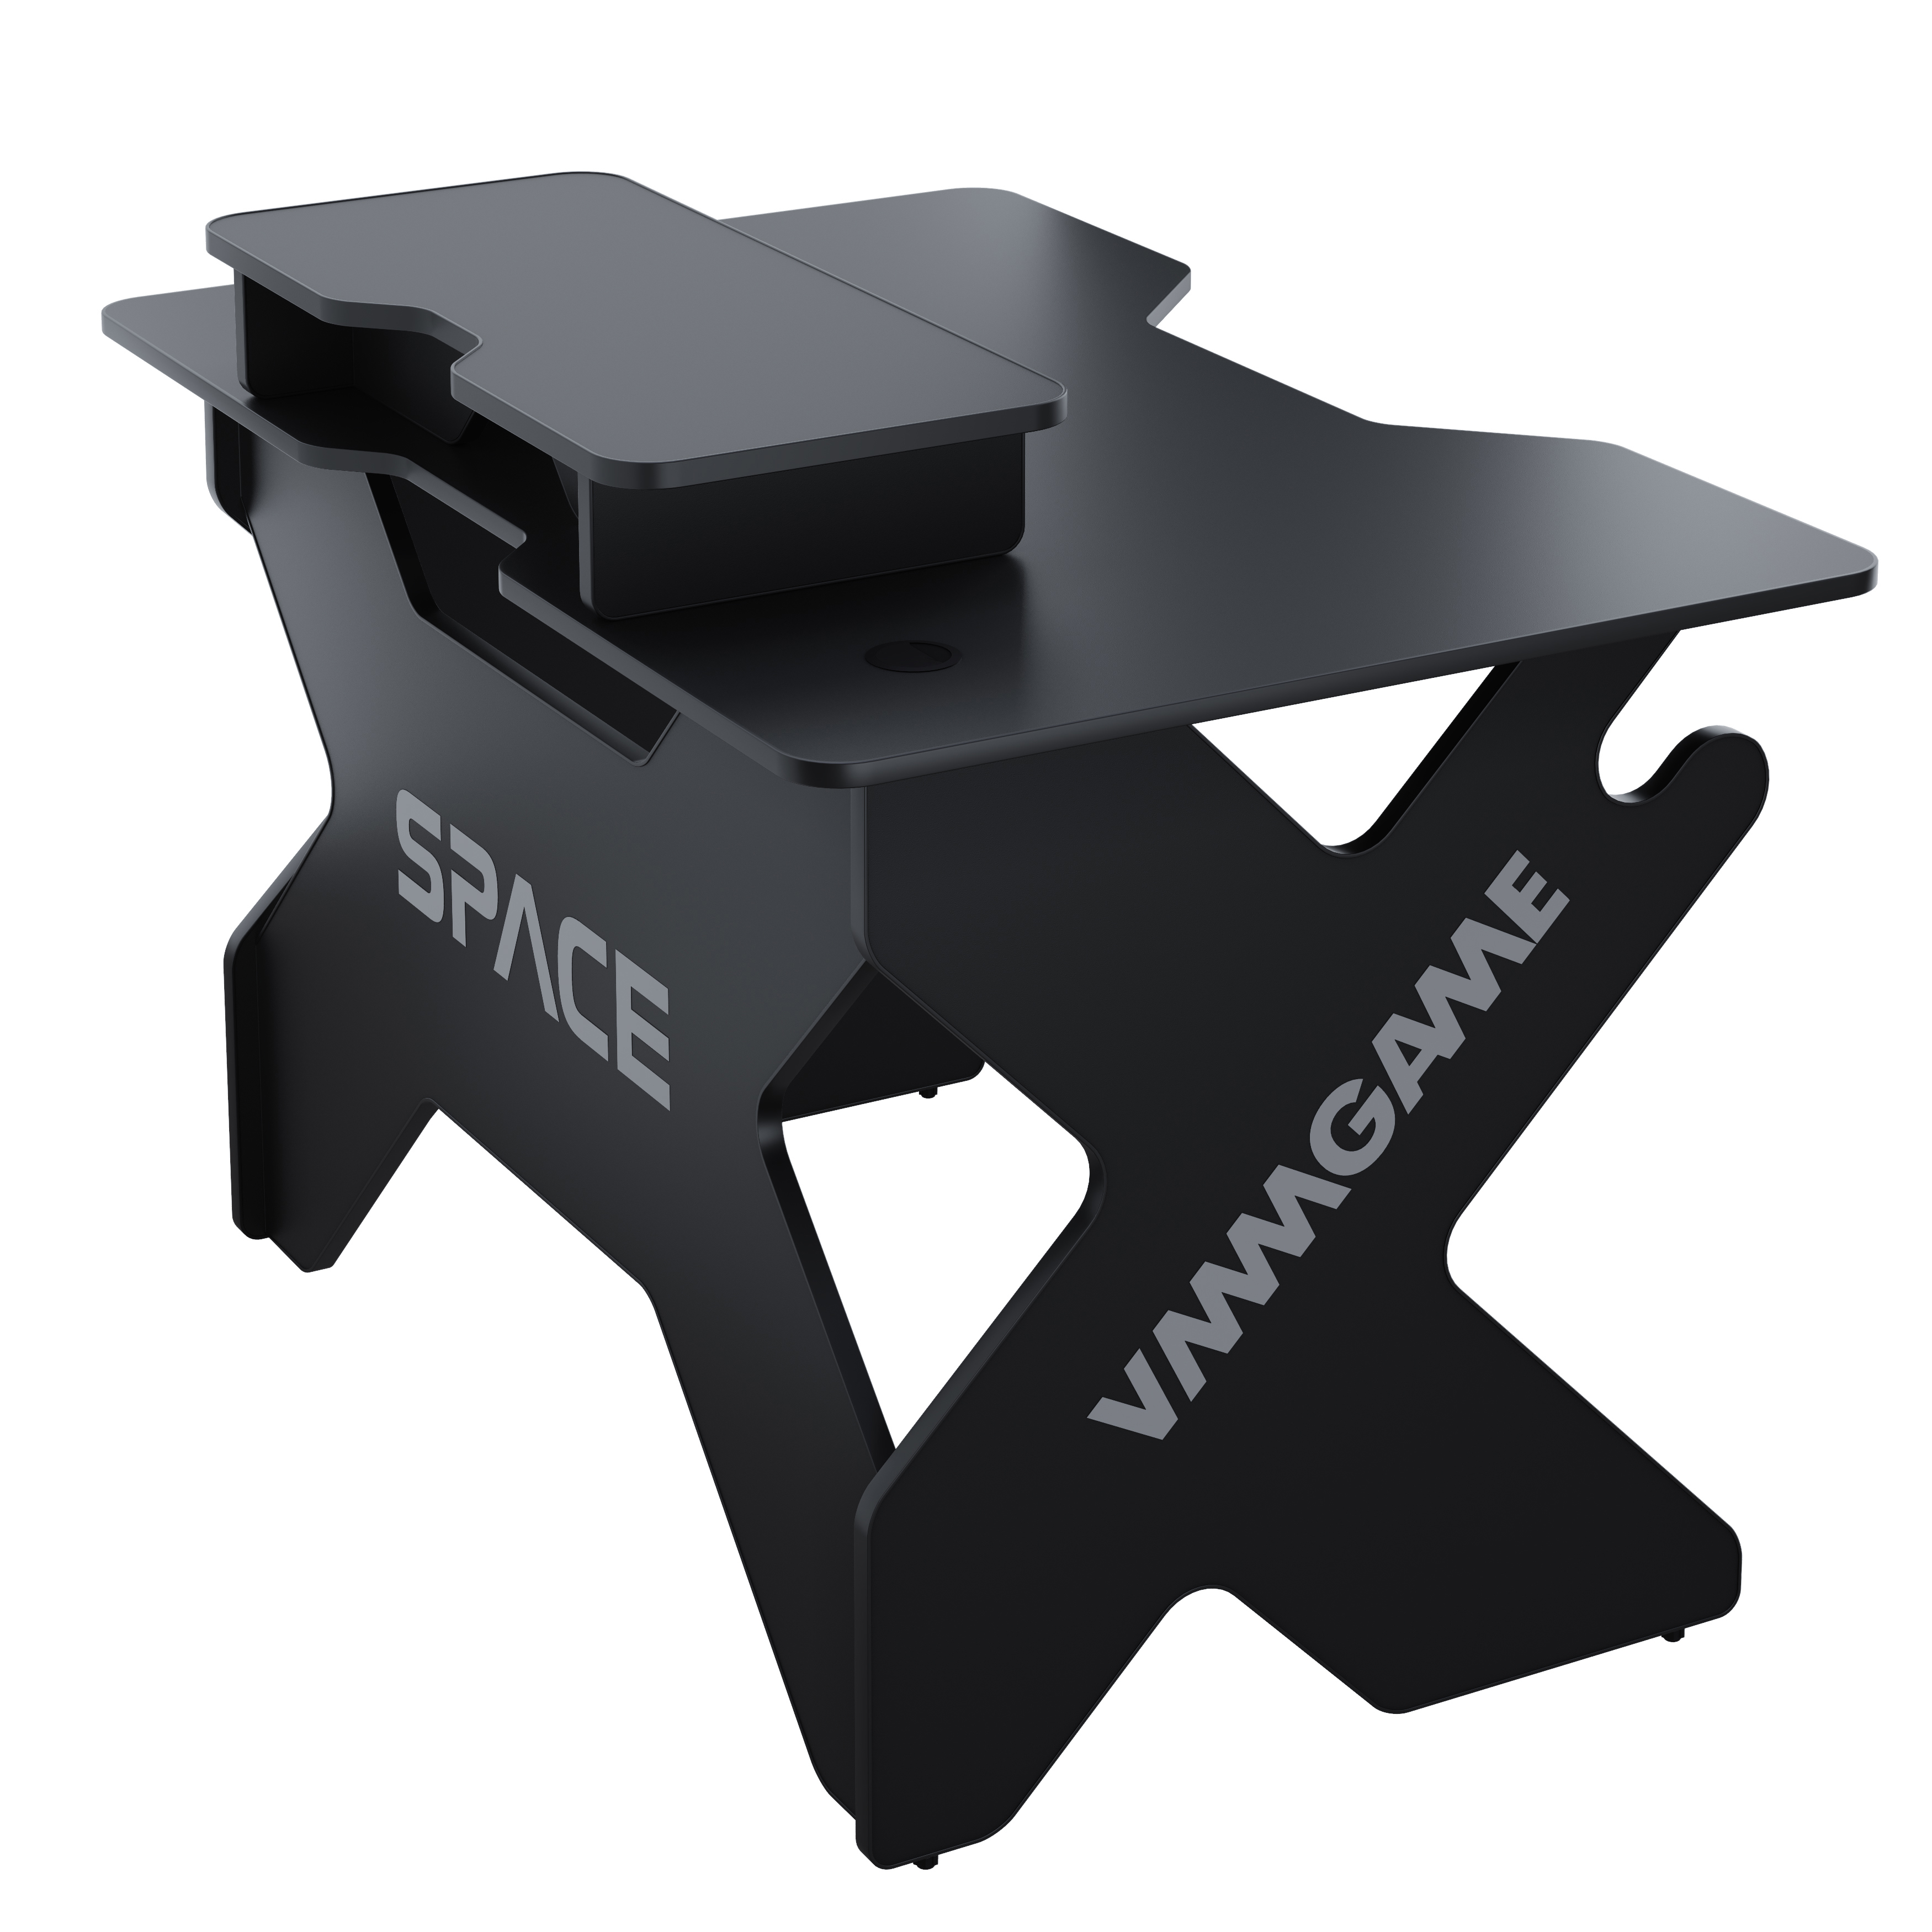 Vmmgame space. Игровой компьютерный стол vmmgame Space 140. Vmmgame игровой стол Space 120. Vmmgame Space 140 Dark. Стол компьютерный vmmgame Space 140 Dark черный.